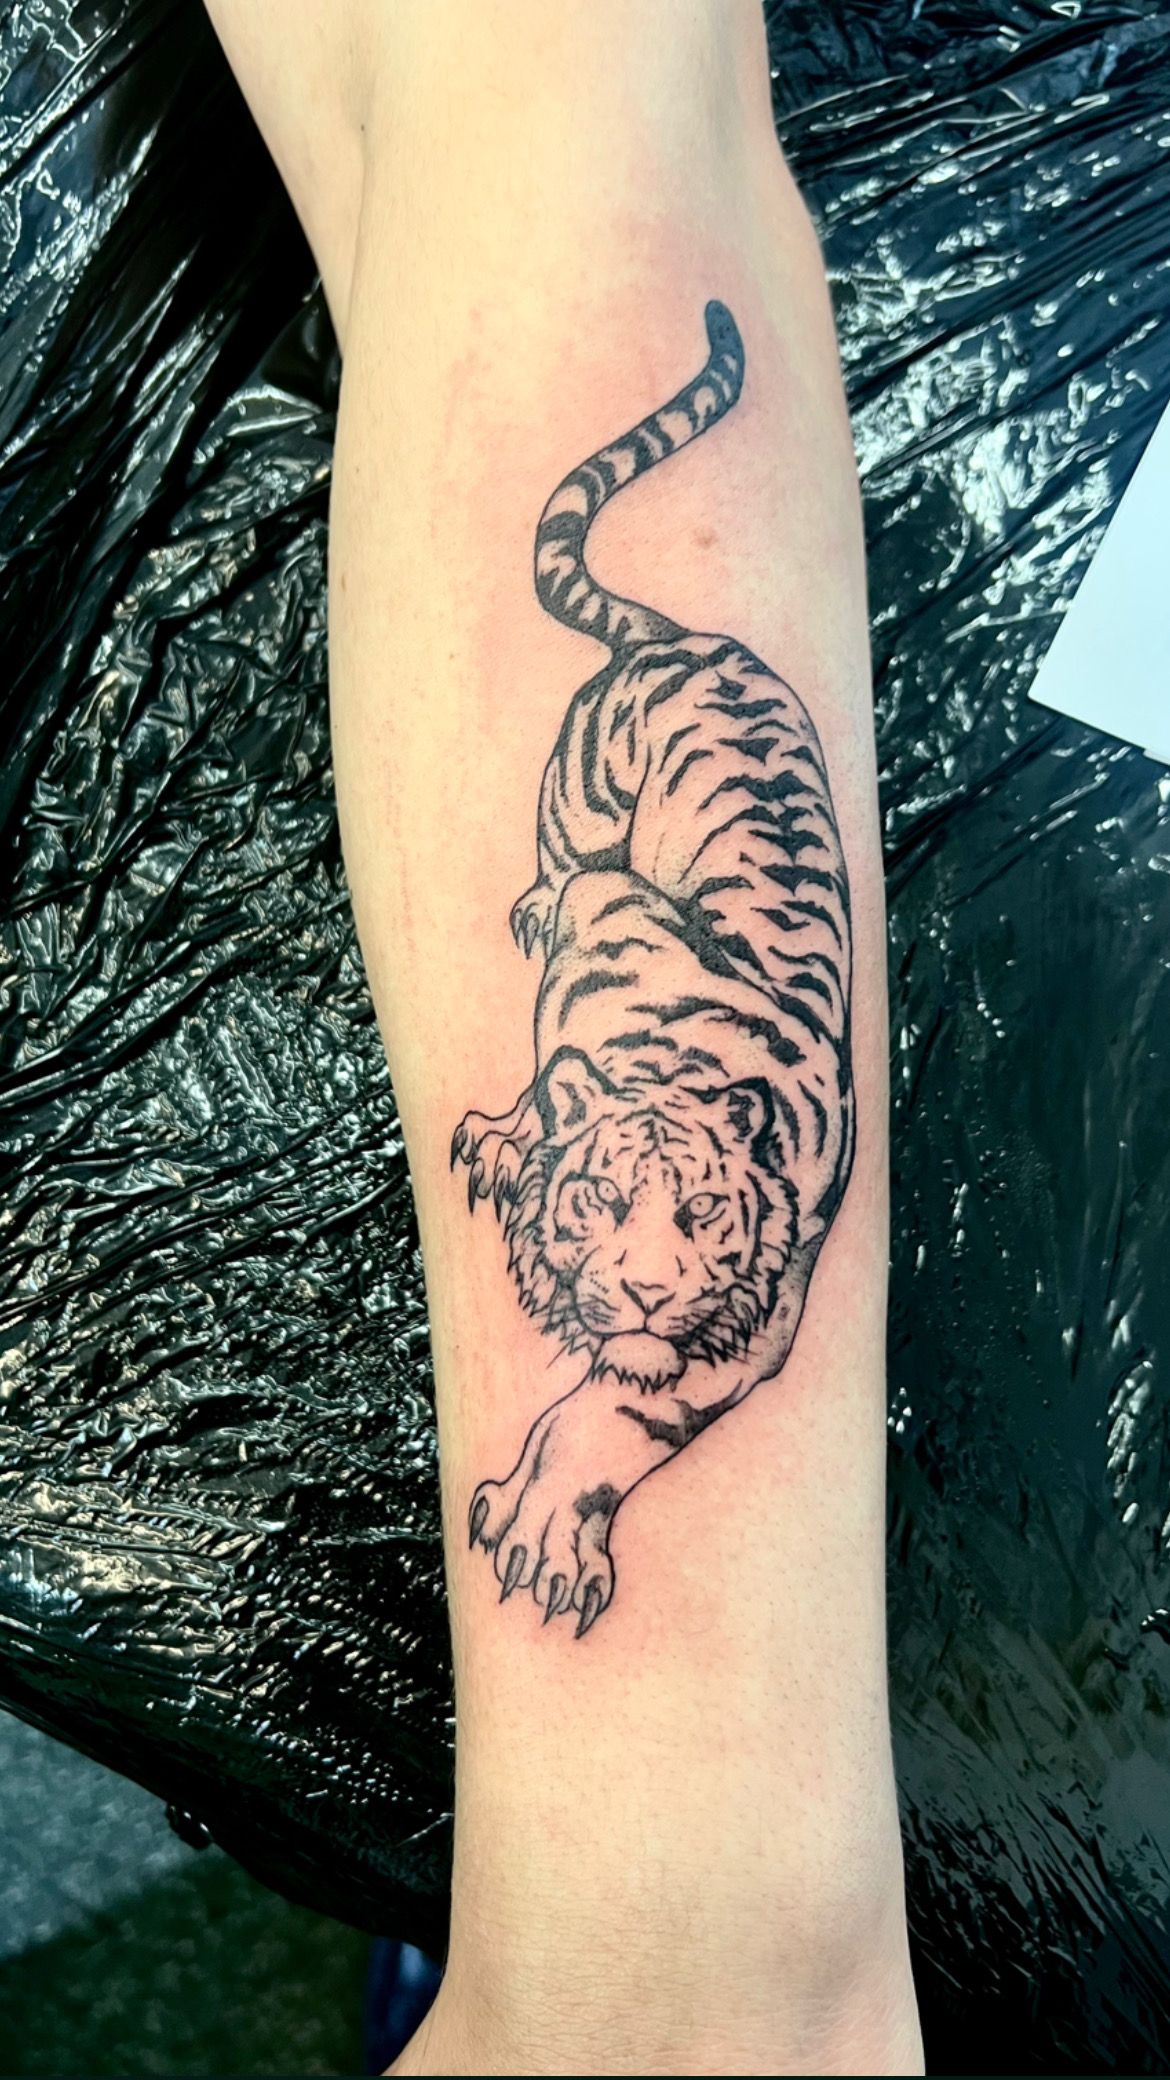 White Tiger Tattoo by Hellsong-Diabla on DeviantArt